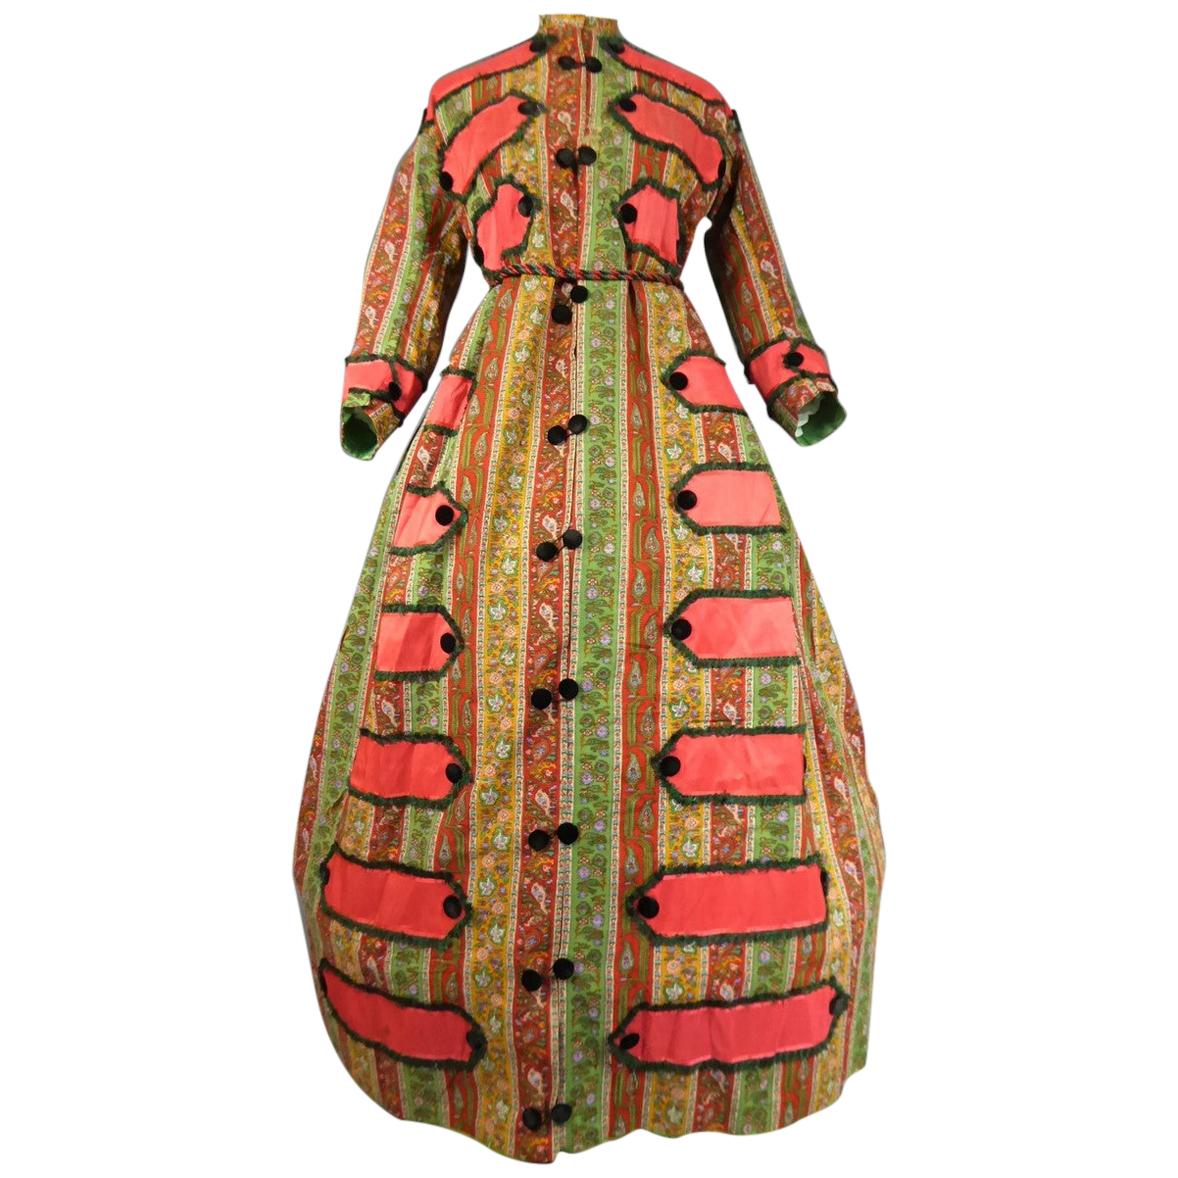 Printed challis Crinoline dress circa 1860